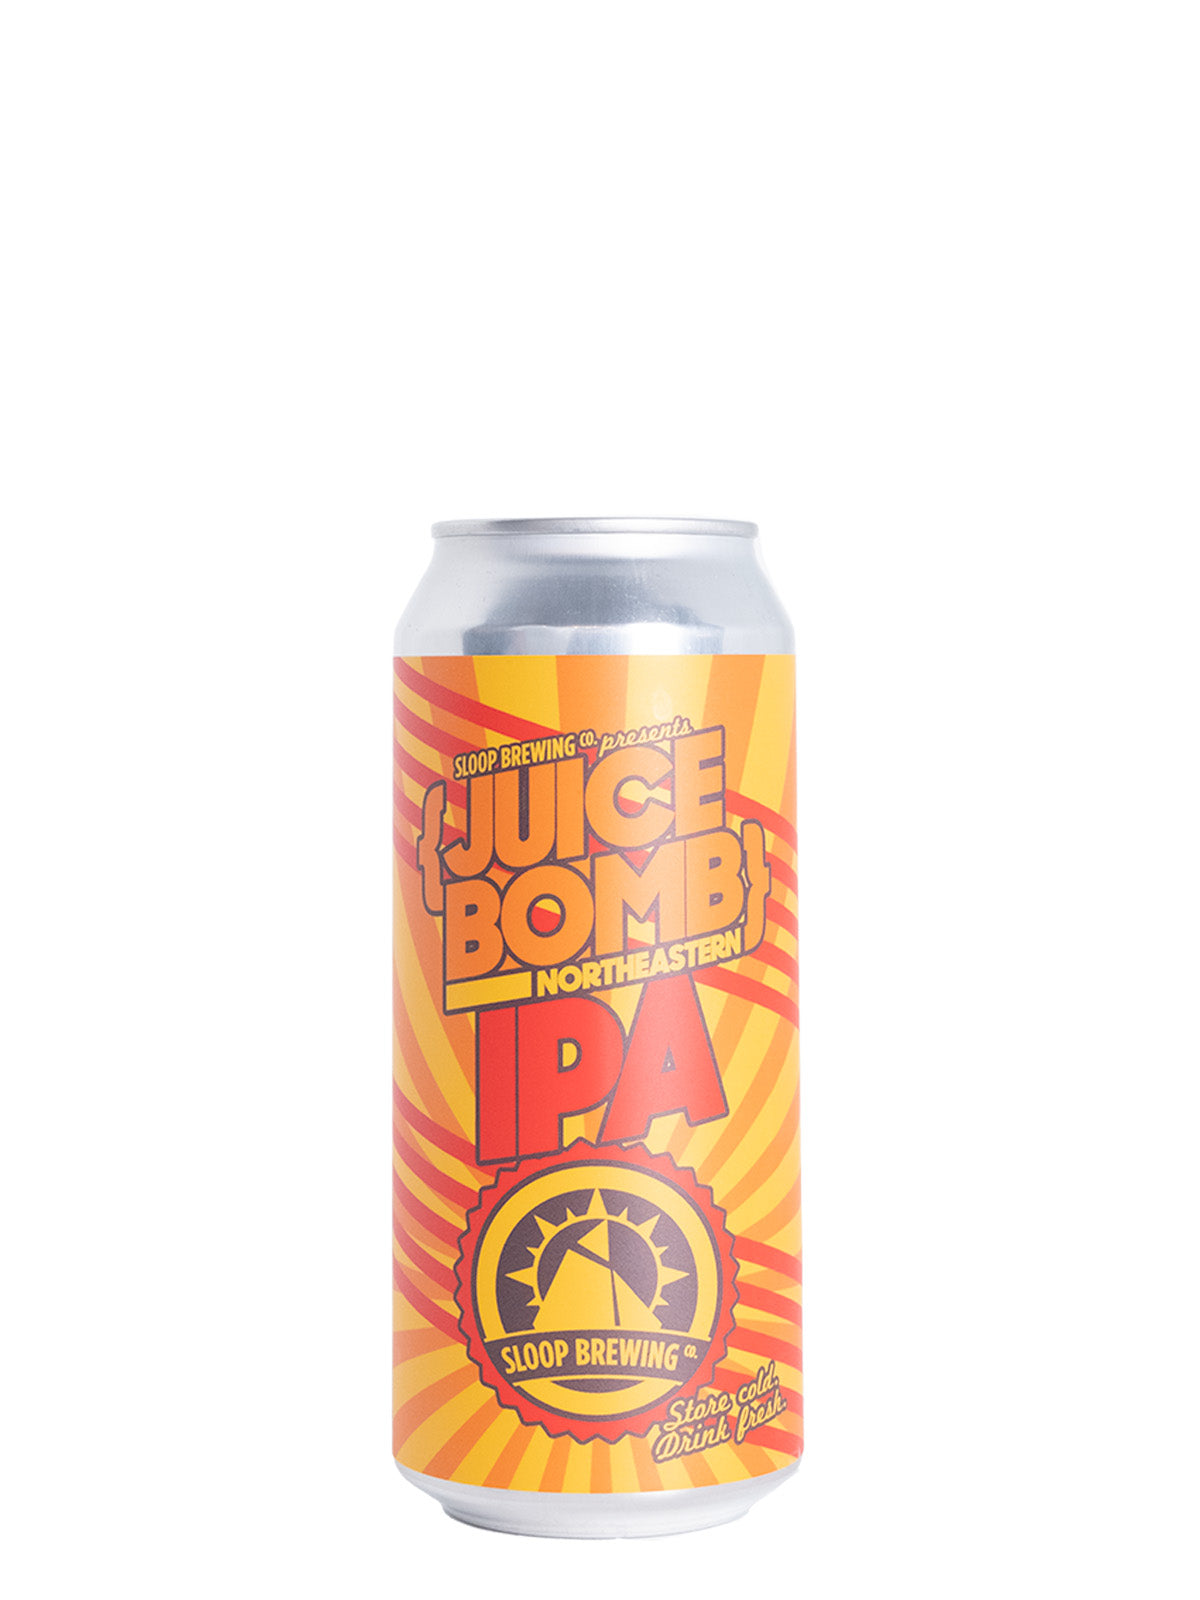 Sloop Brewing Co. "Juice Bomb" IPA (Hampton, NH)